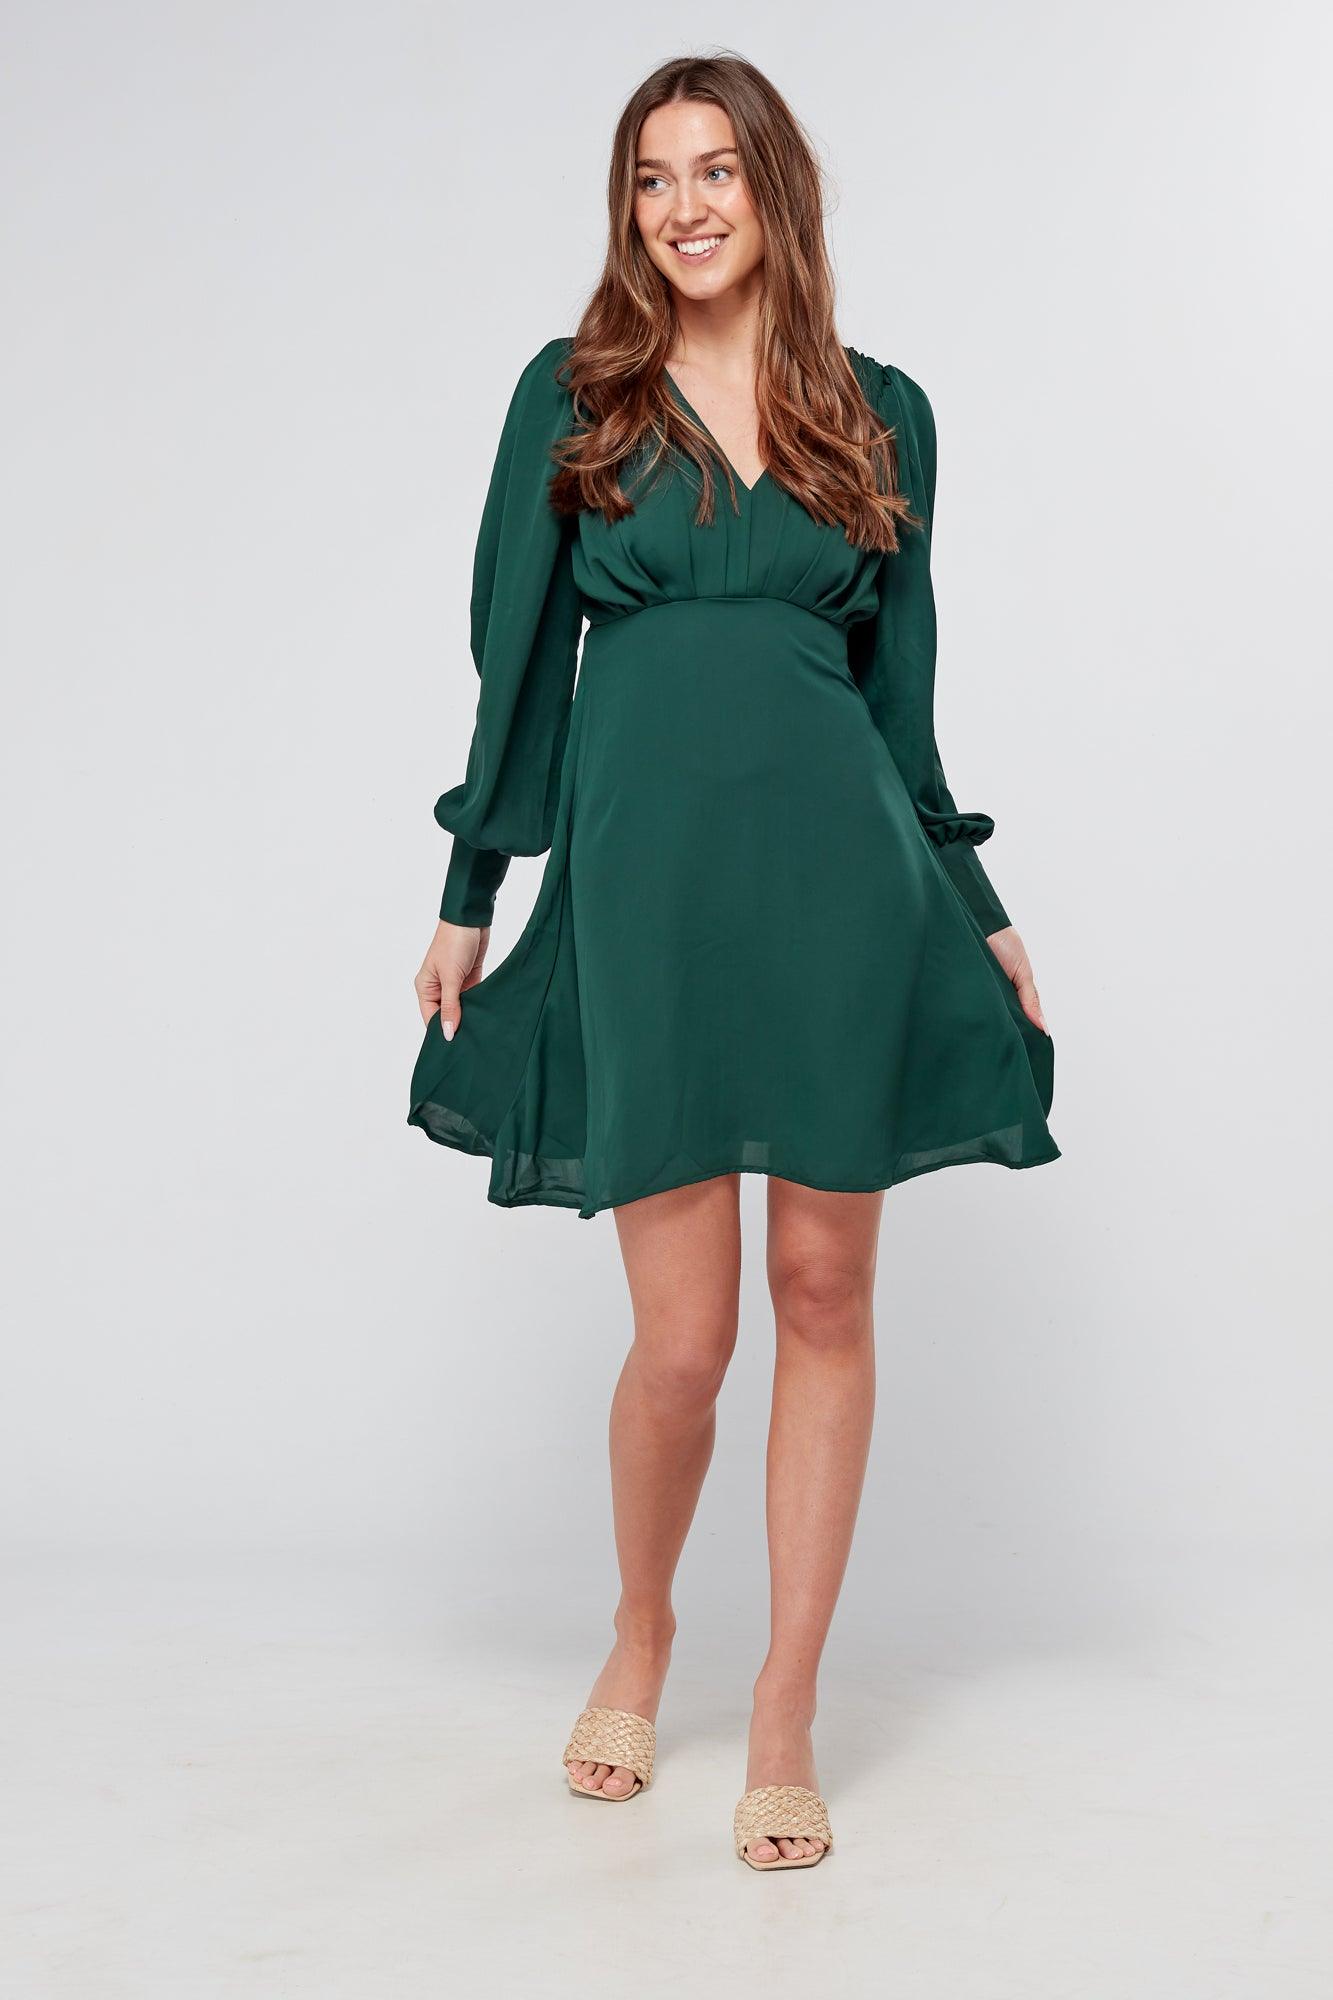 Layalina Green Mini Dress - TAHLIRA